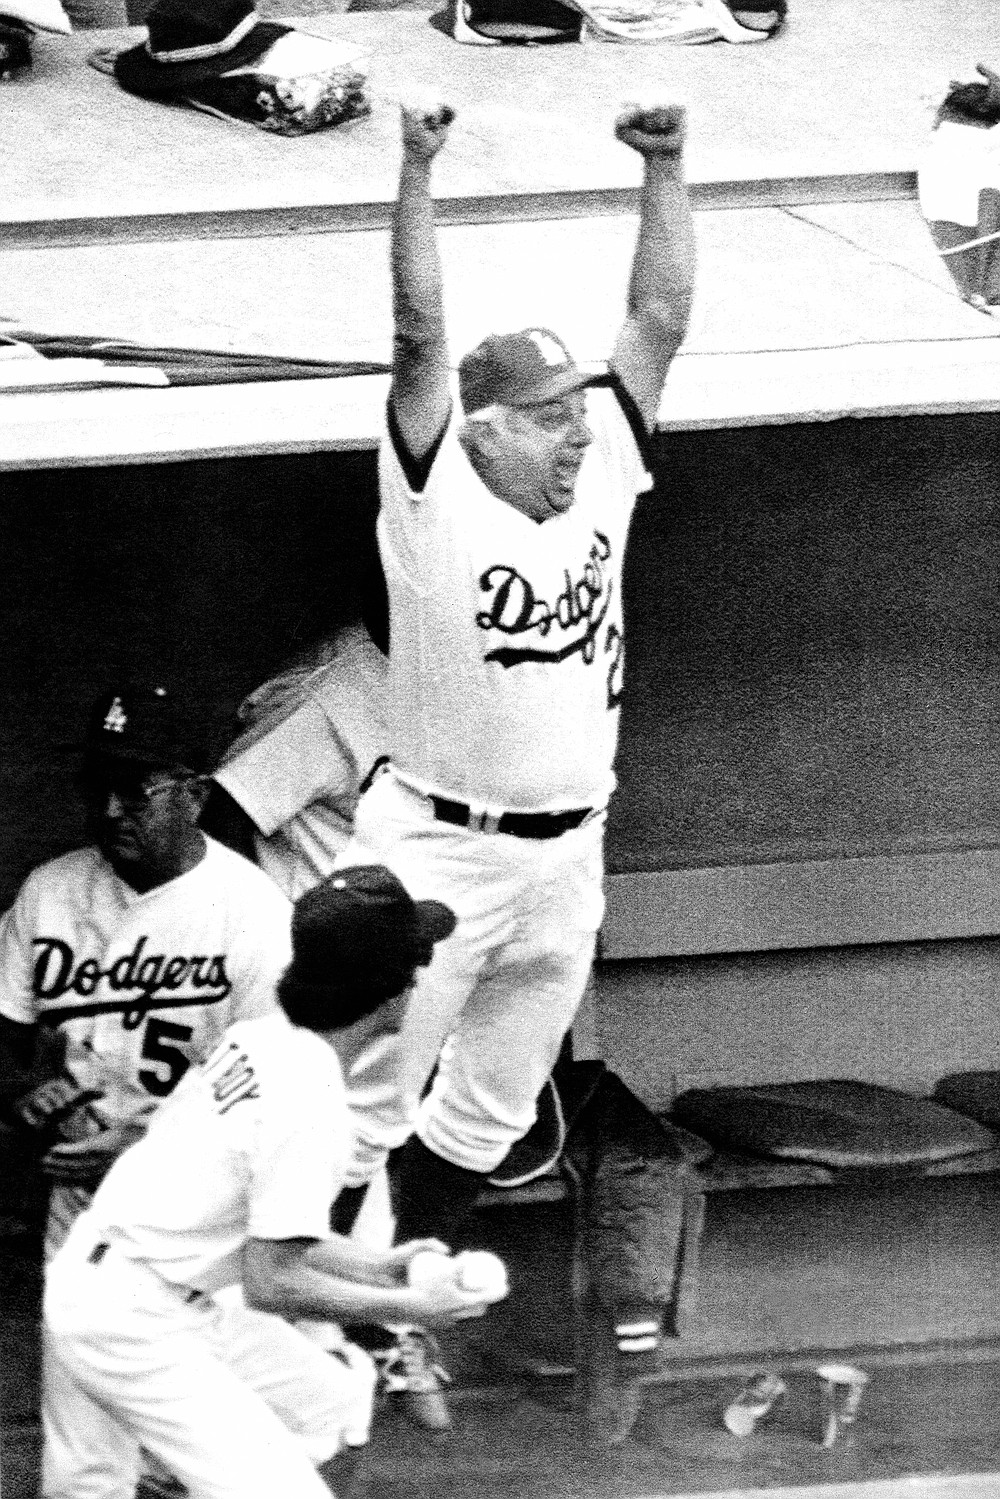 Dodger legend, lifelong Catholic Tommy Lasorda dies at 93